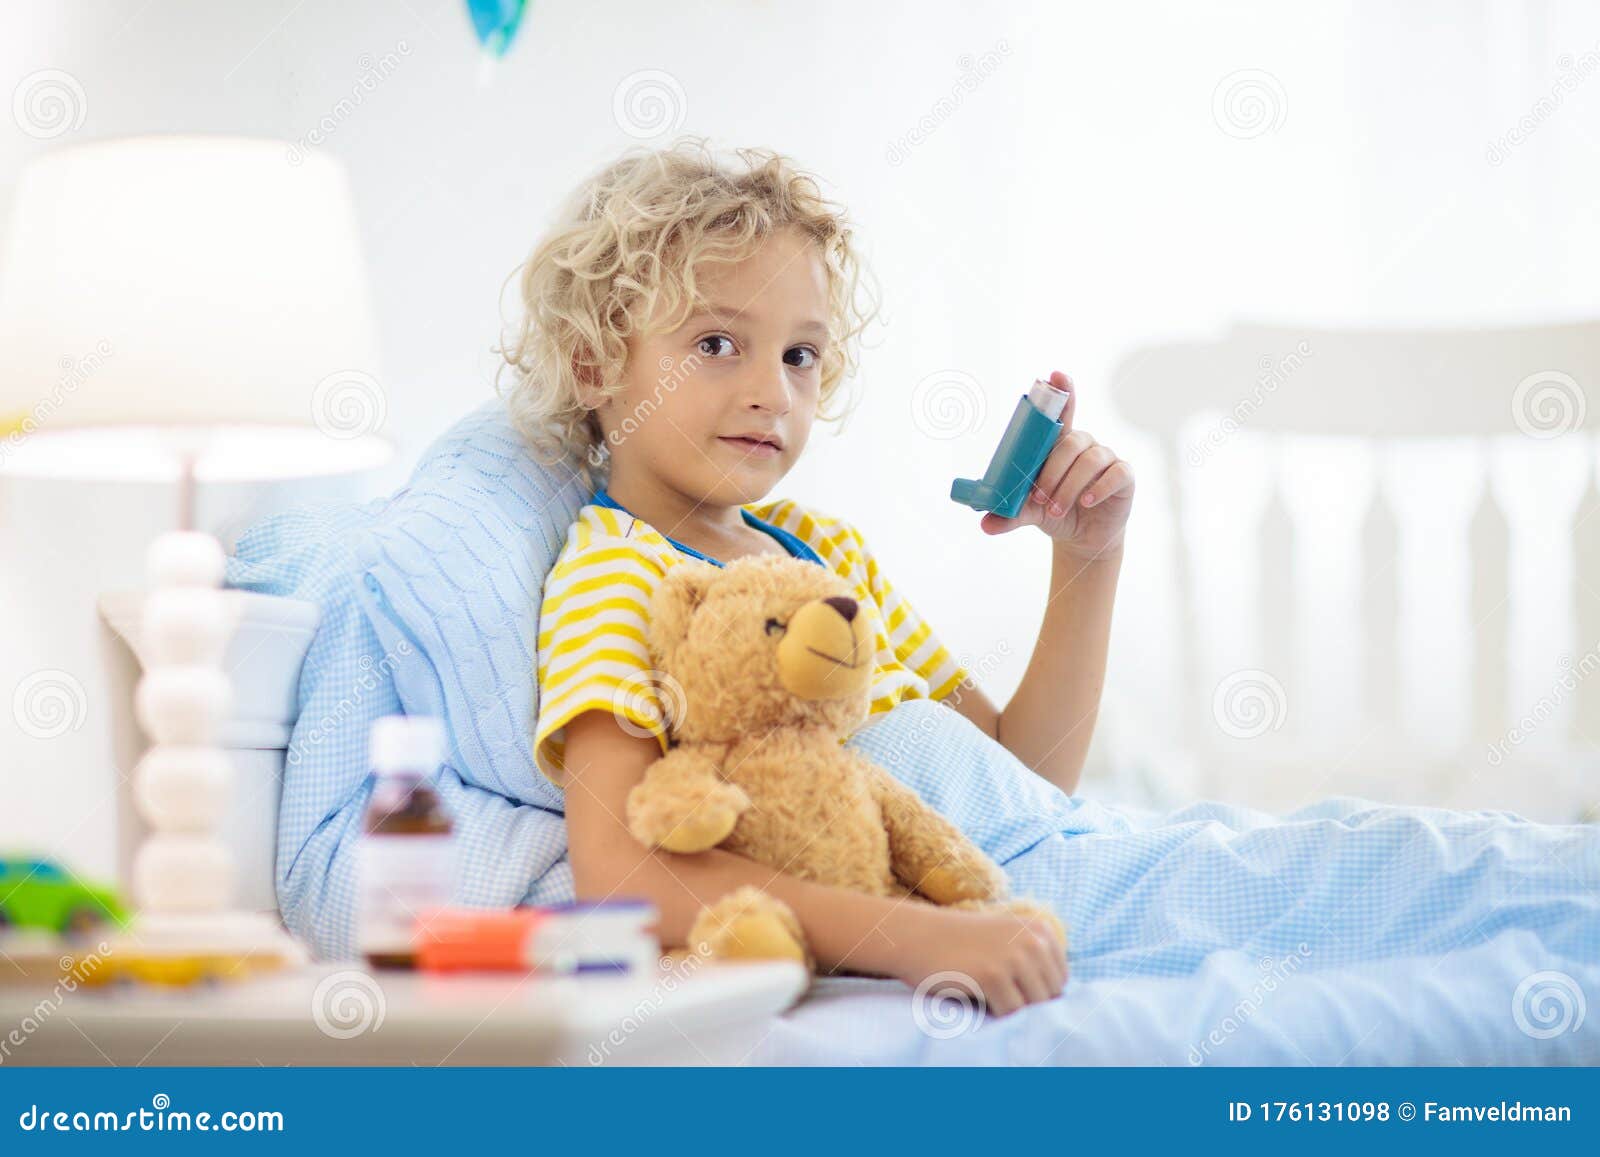 sick little boy with asthma medicine. ill child